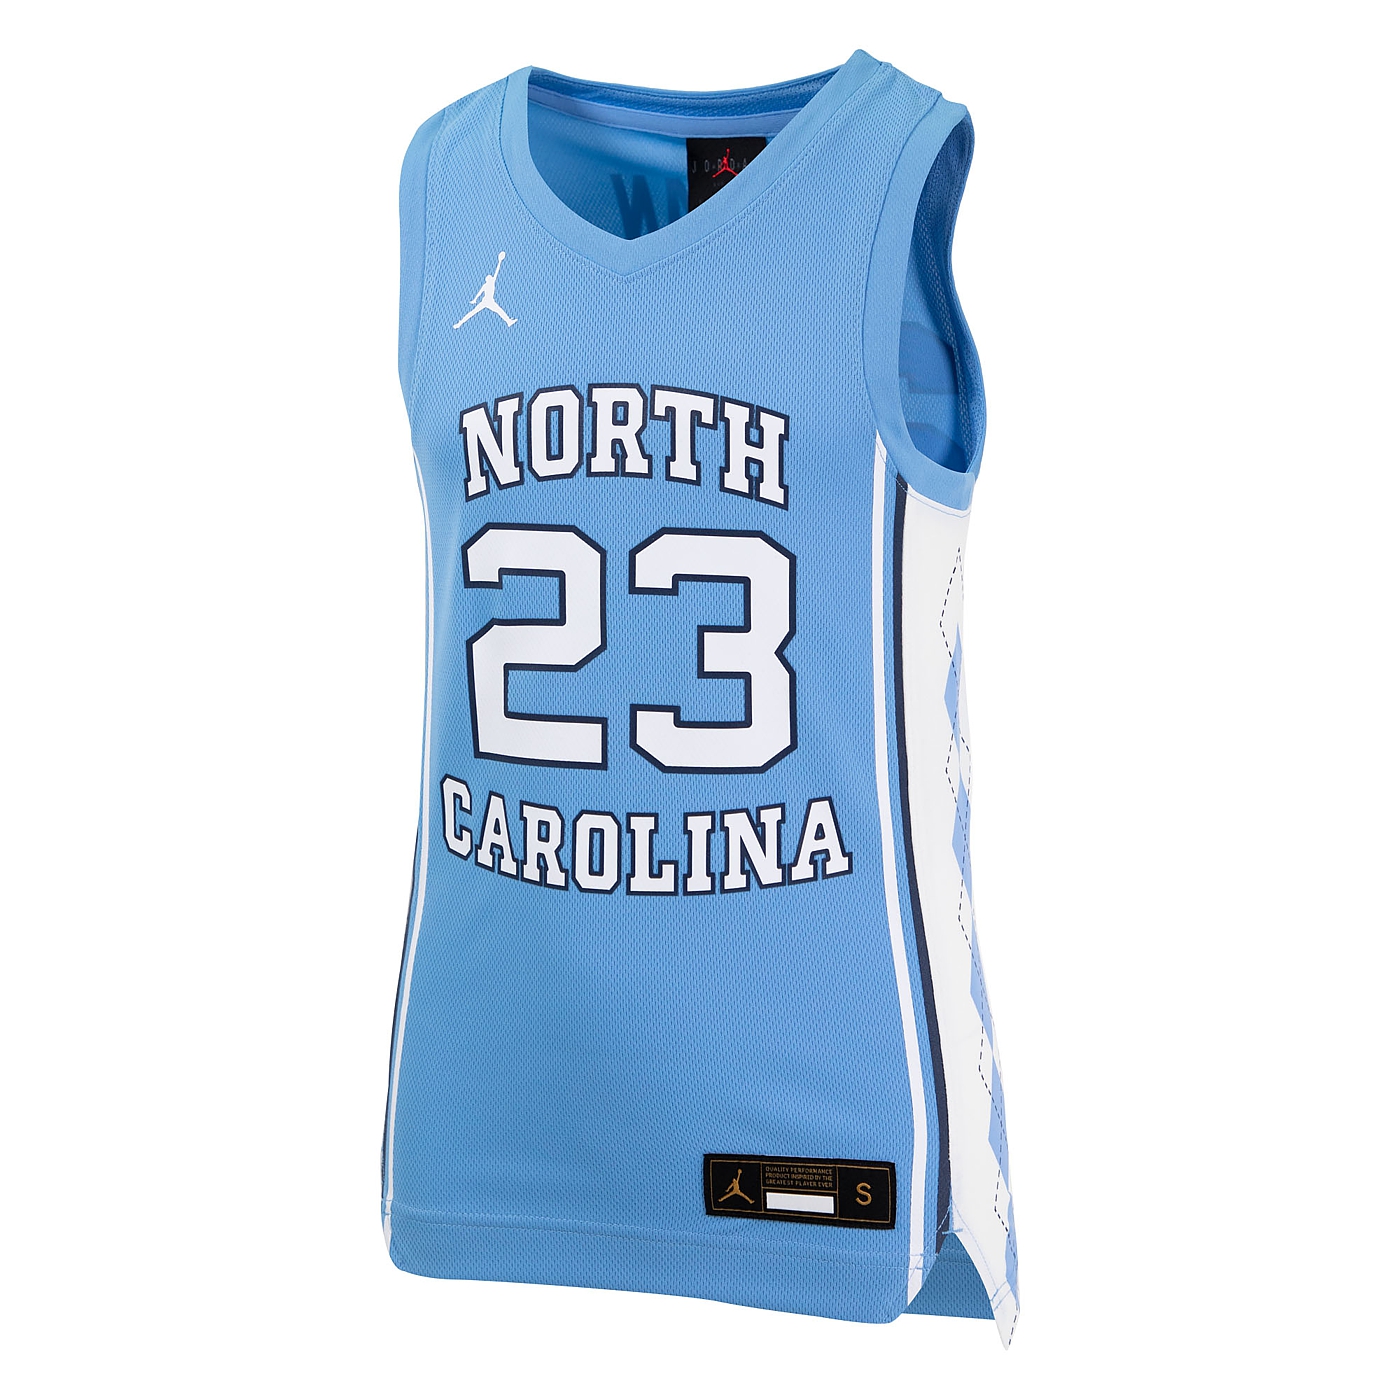 Johnny T-shirt - North Carolina Tar Heels - Youth #23 Replica Jordan  Basketball T (CB) by Nike